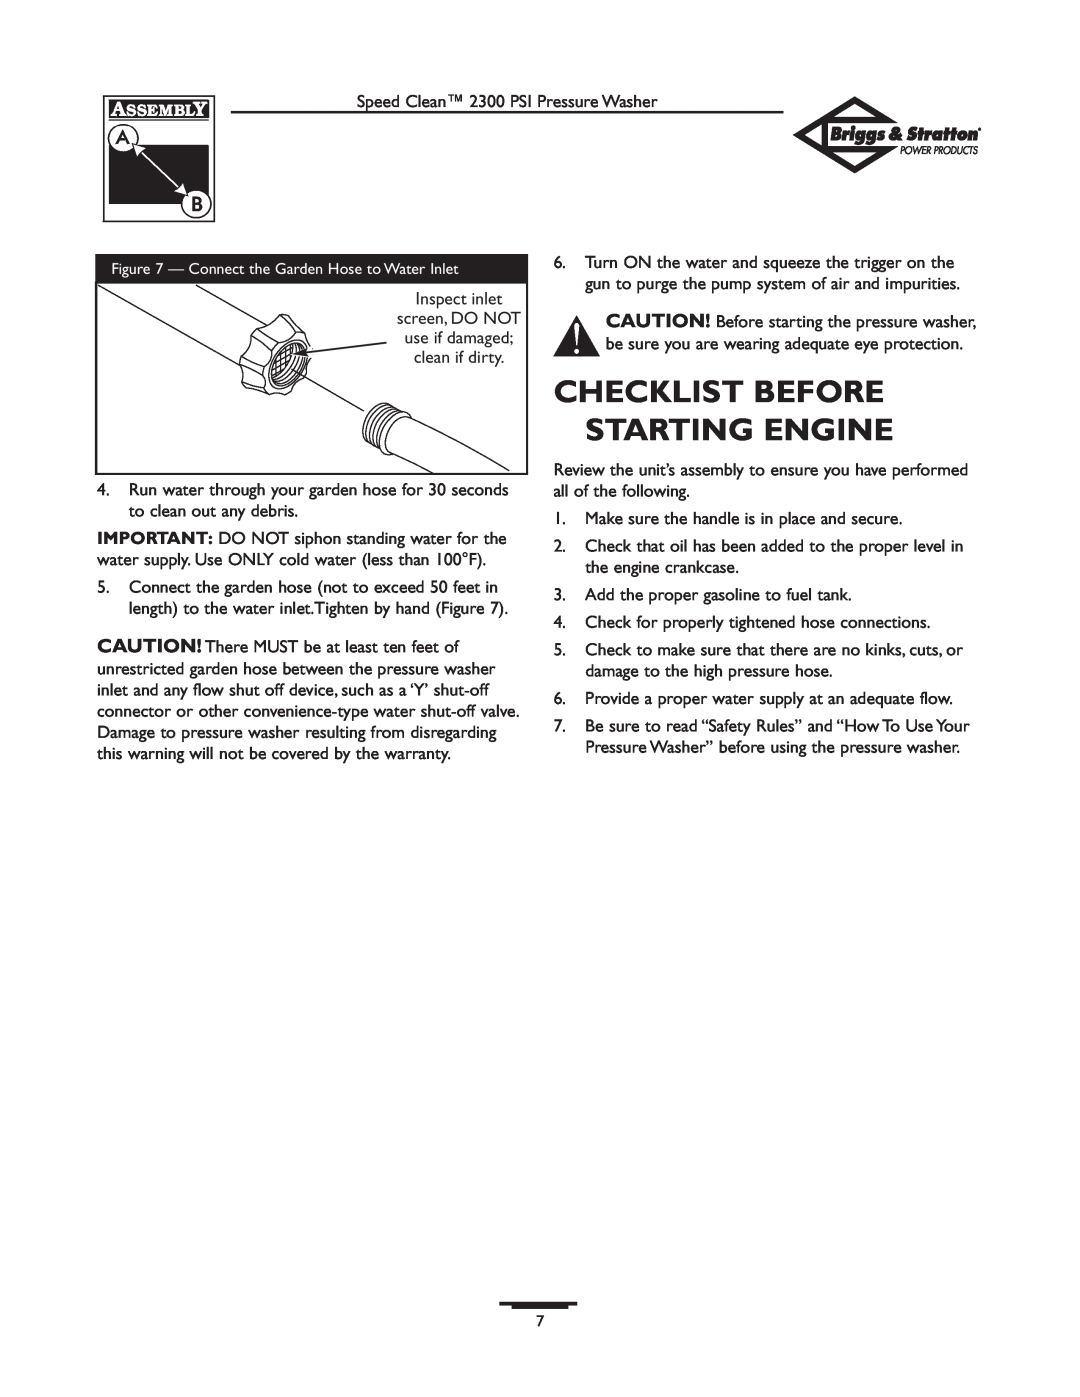 Briggs & Stratton 1909-0 owner manual Checklist Before Starting Engine 